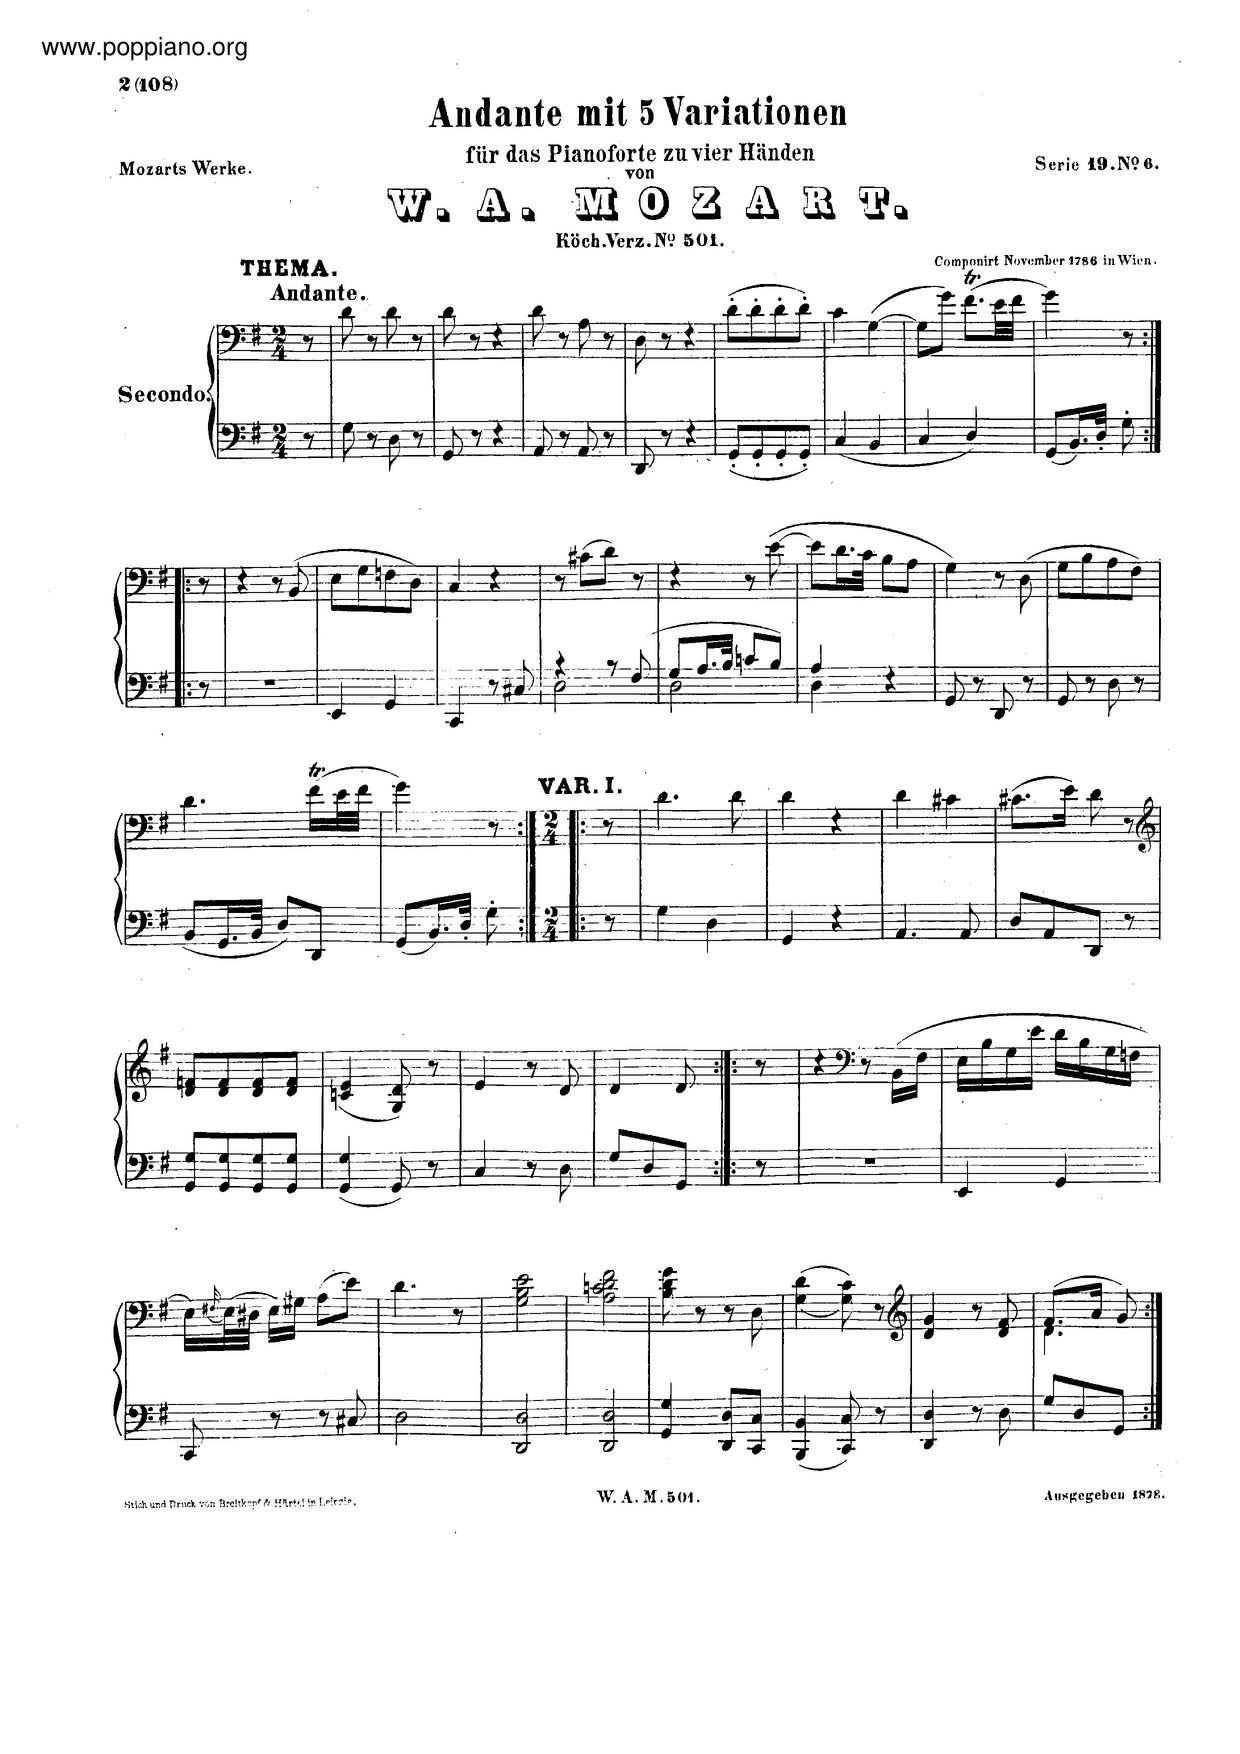 5 Variations In G Major, K. 501琴譜